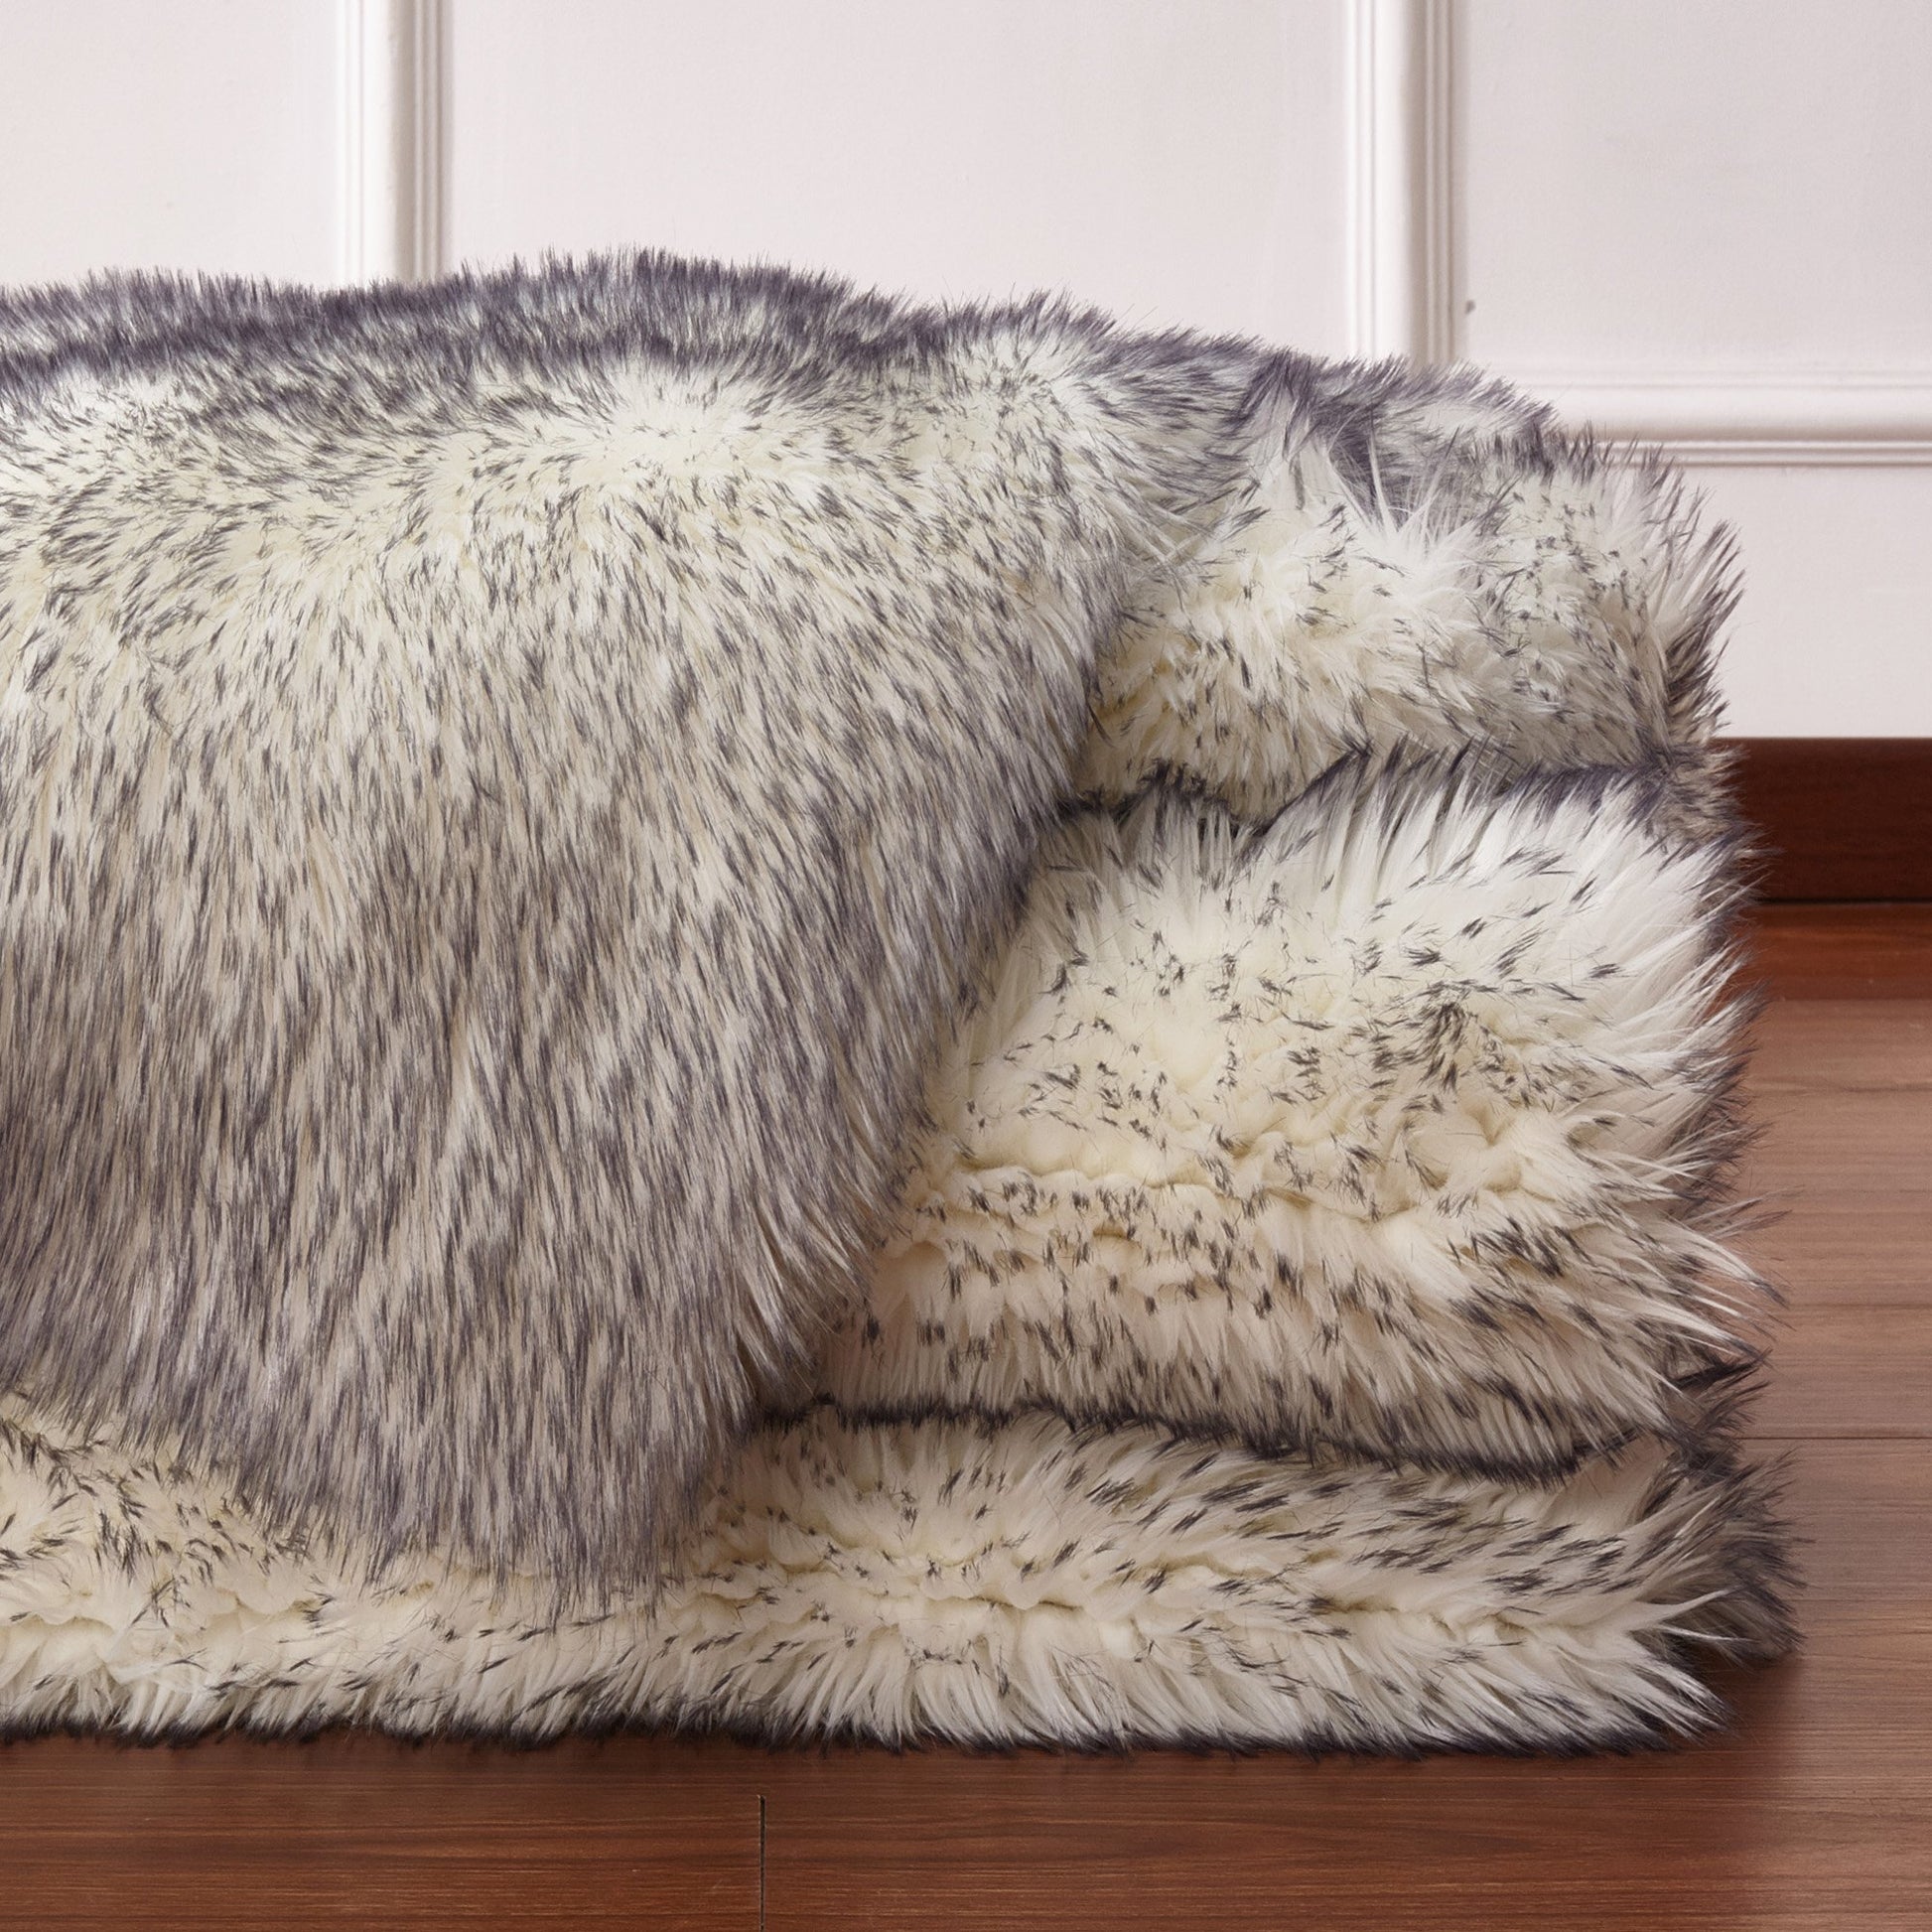 High Quality Soft Cozy Fuzzy Faux Fox Fur Area Rug / Carpet